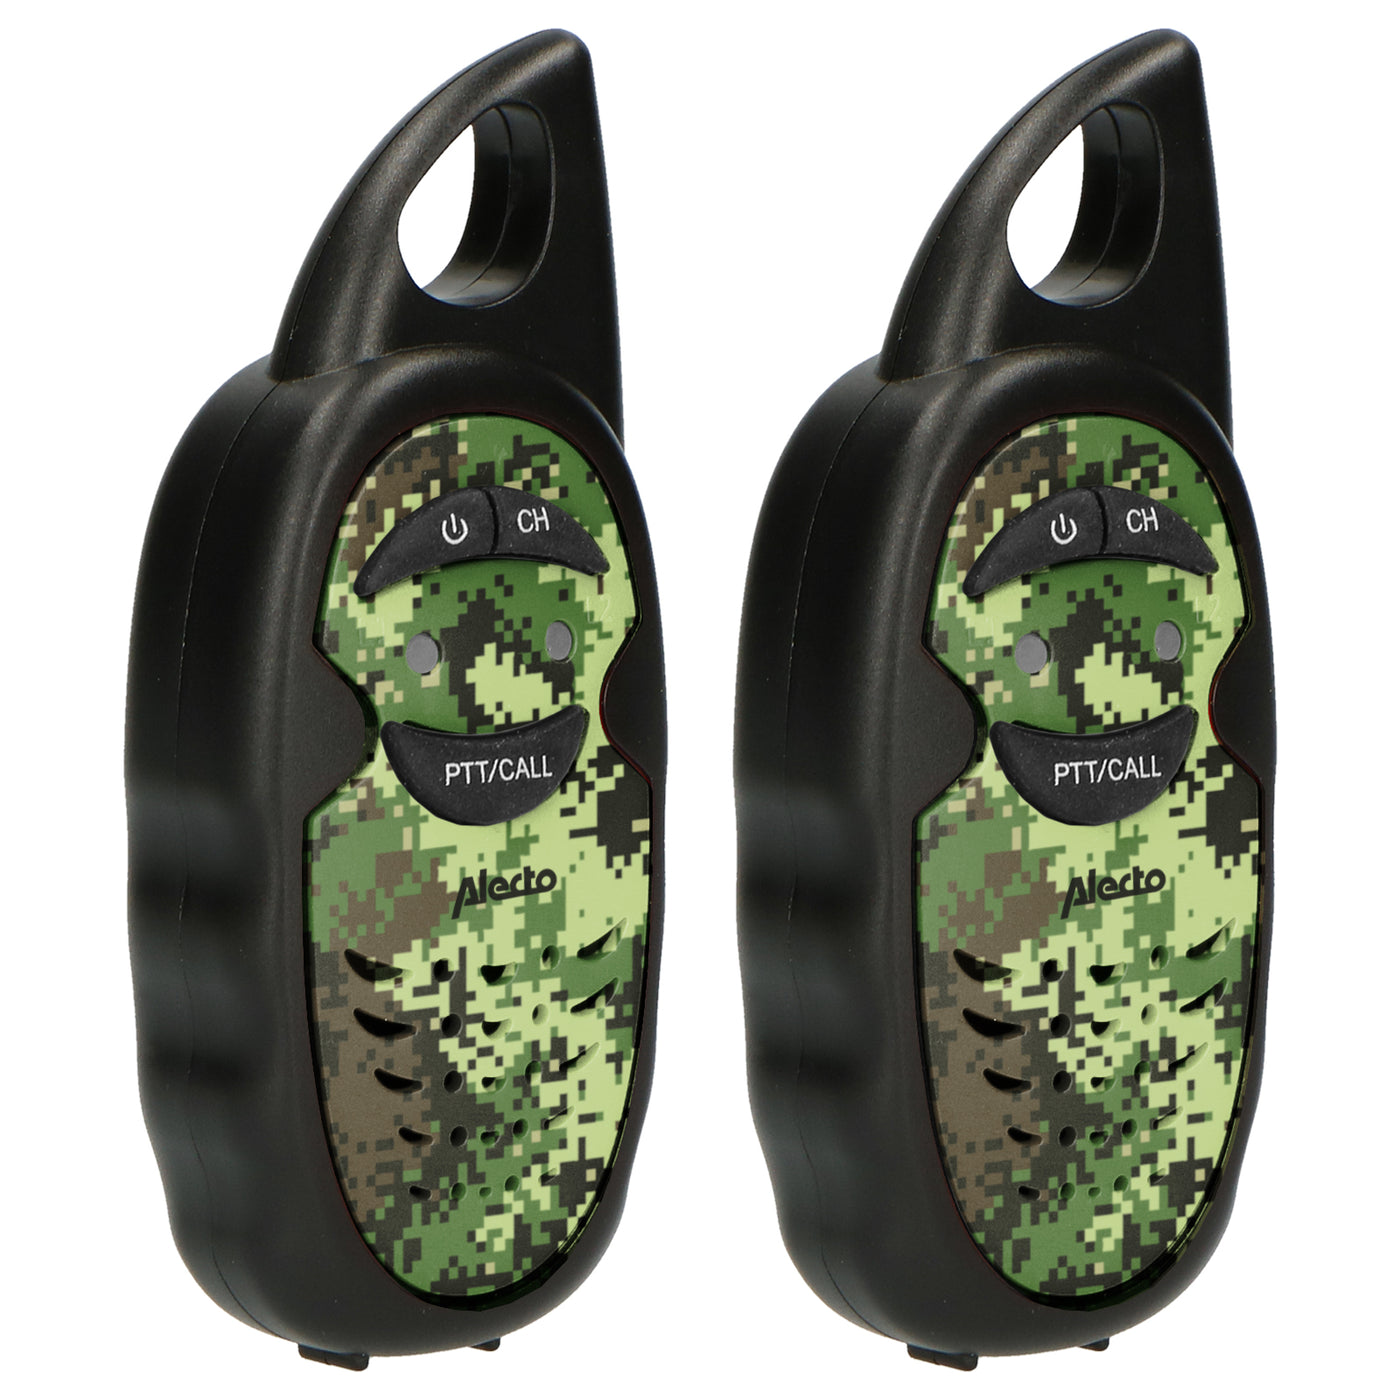 Alecto FR-05CAMO - Set of 2 kids’ walkie talkies, range up to 3 kilometers, camouflage